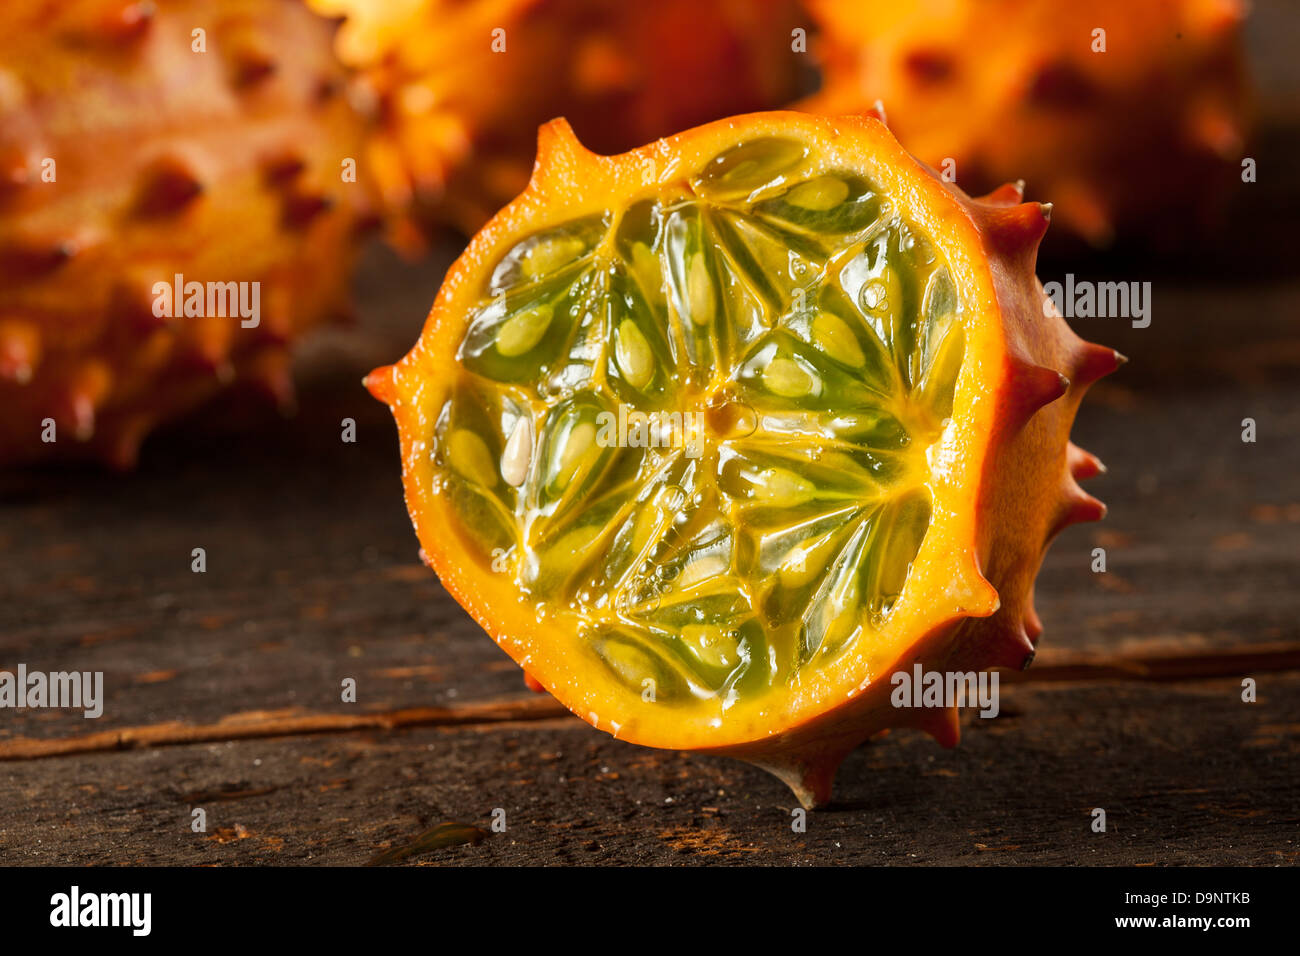 Organic Orange Kiwano Melon with Prickly Spikes Stock Photo